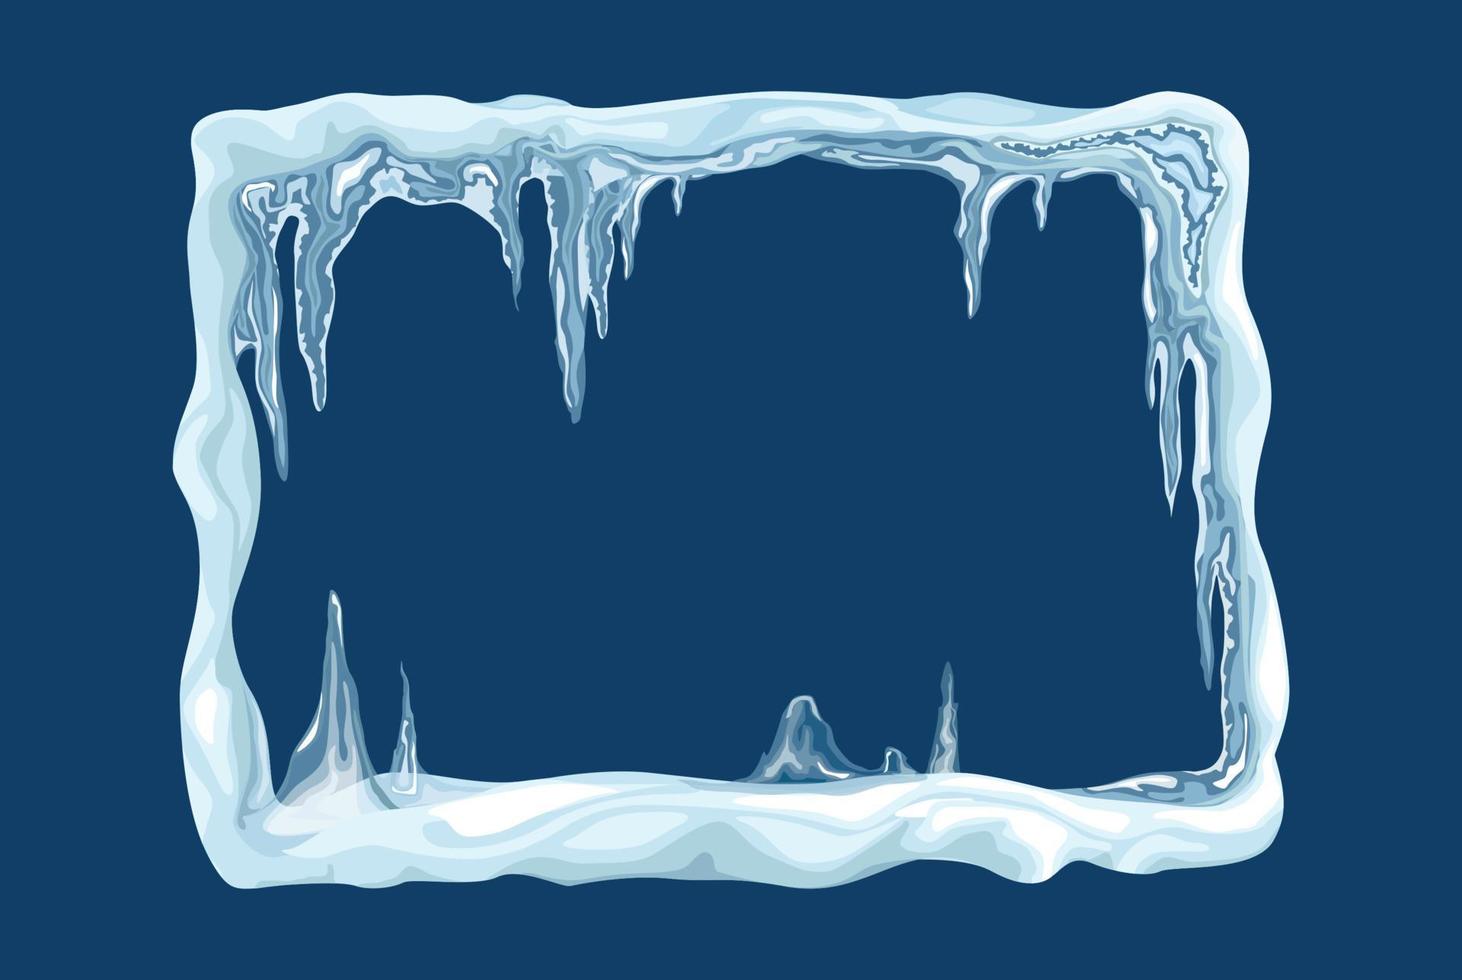 marco de nieve en fondo azul vector